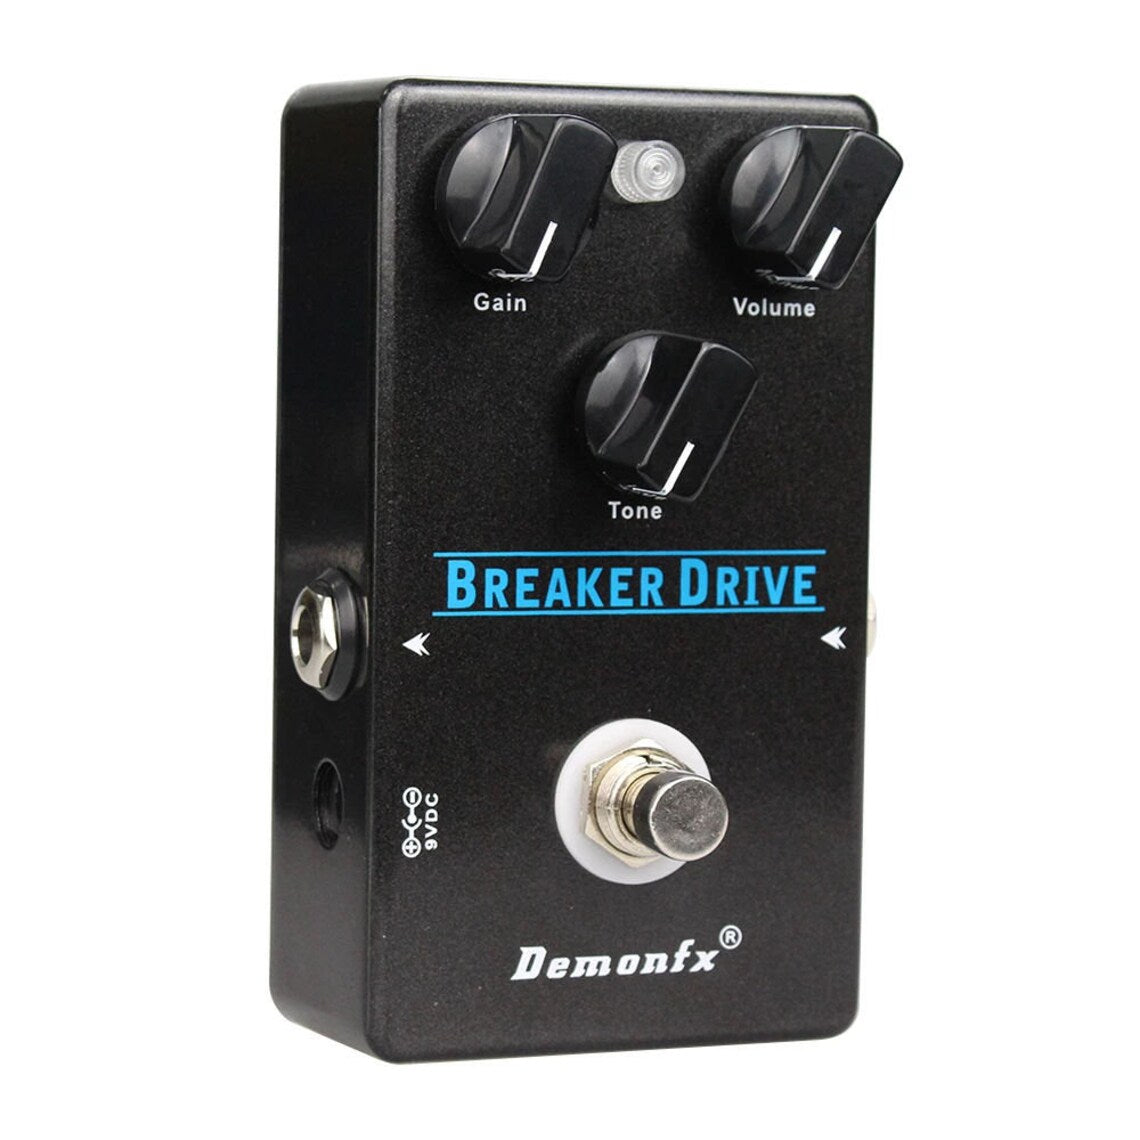 DemonFx Breaker Drive Overdrive Bluesbreaker Clone Pedal